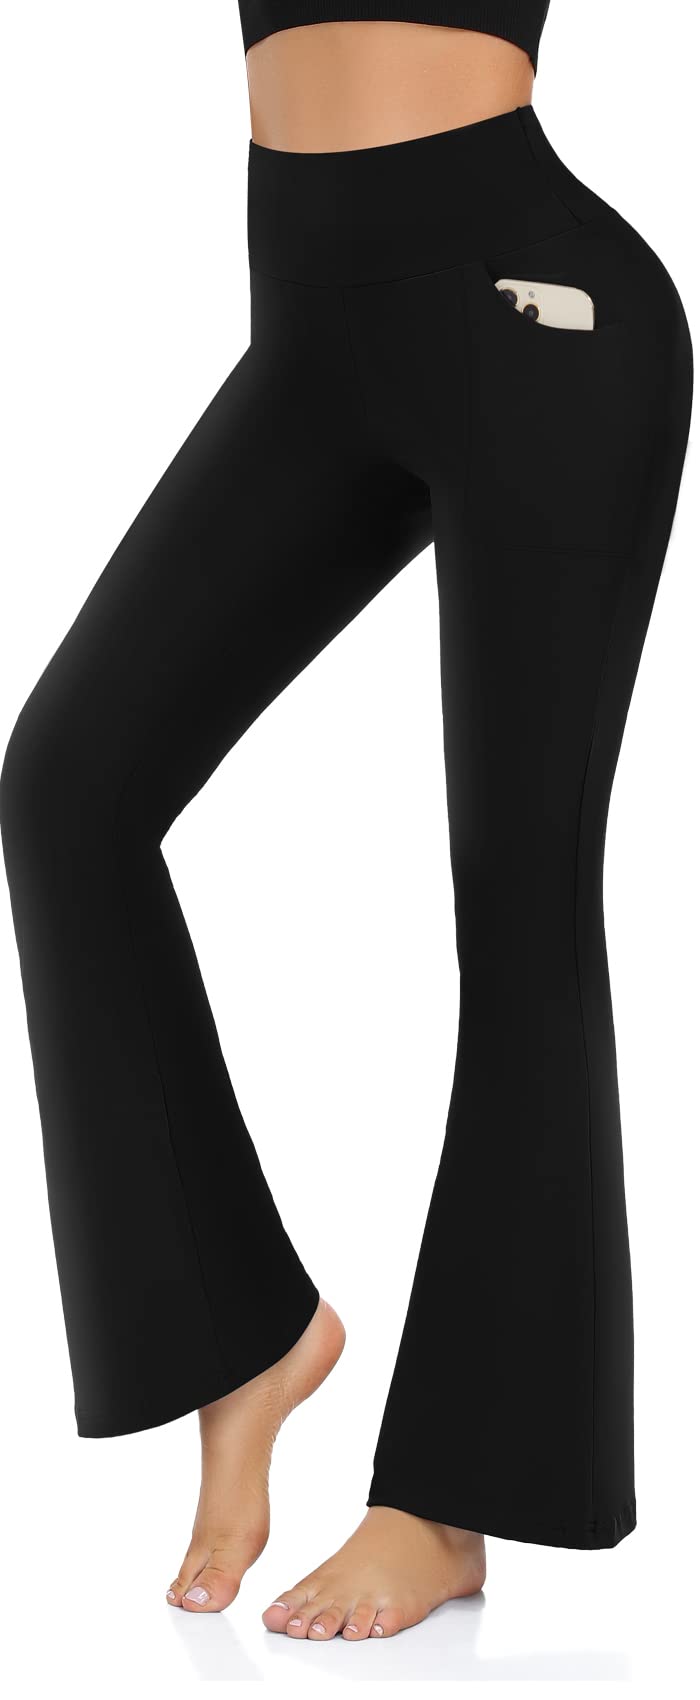  Capri Flare Leggings For Women - High Waist Tummy Control  Bootcut Yoga Pants Workout Flare Capris Pants Navy